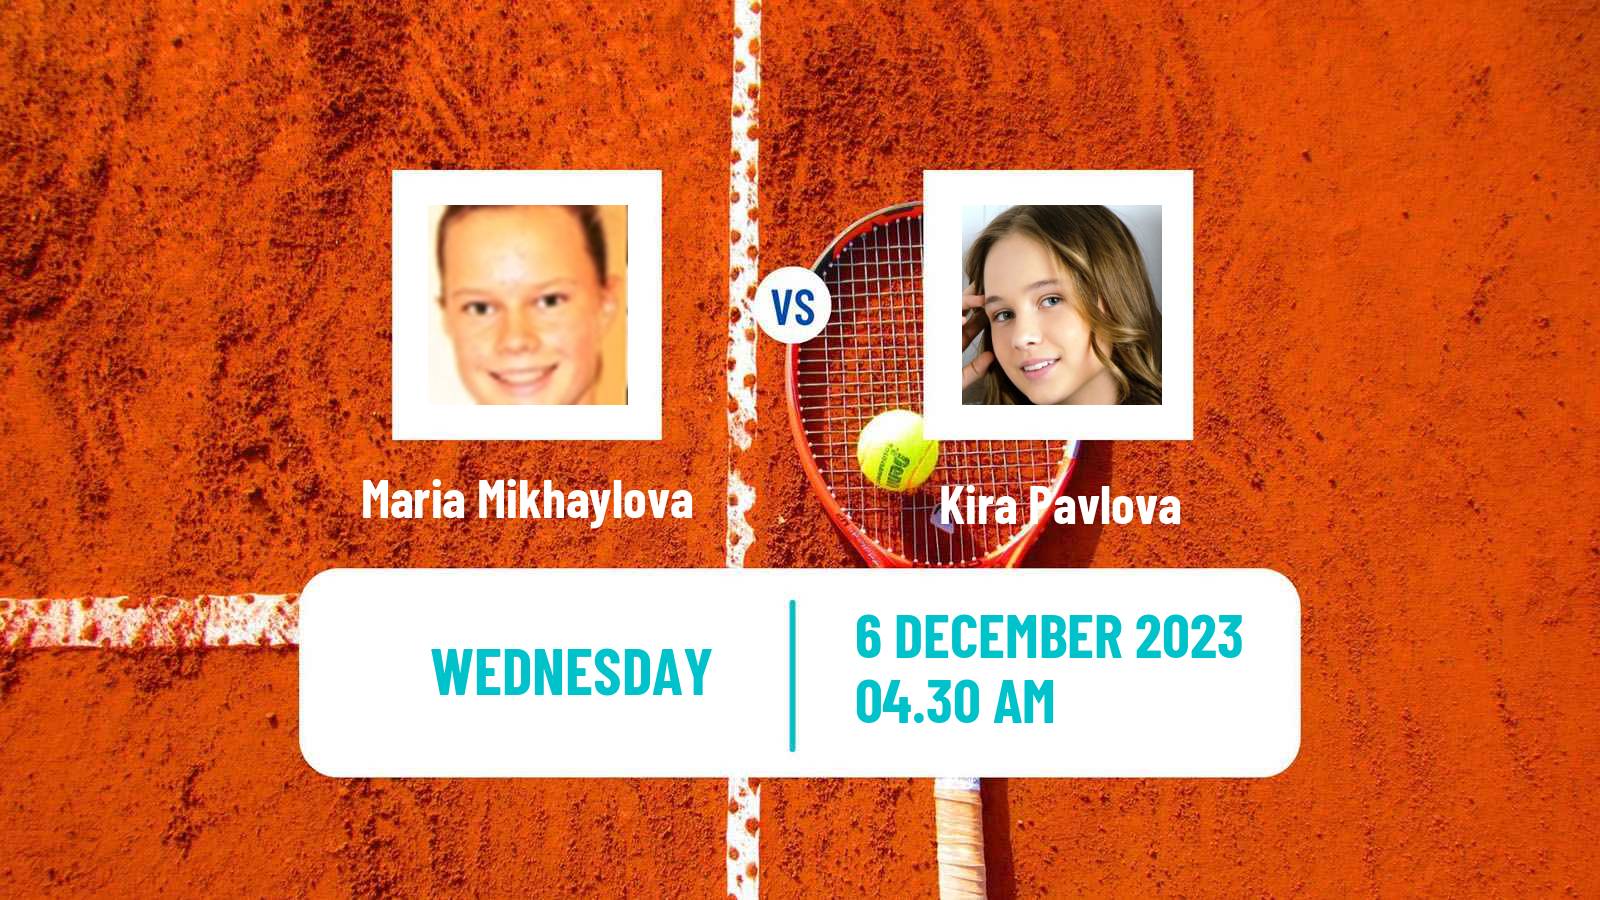 Tennis ITF W15 Sharm Elsheikh 22 Women 2023 Maria Mikhaylova - Kira Pavlova